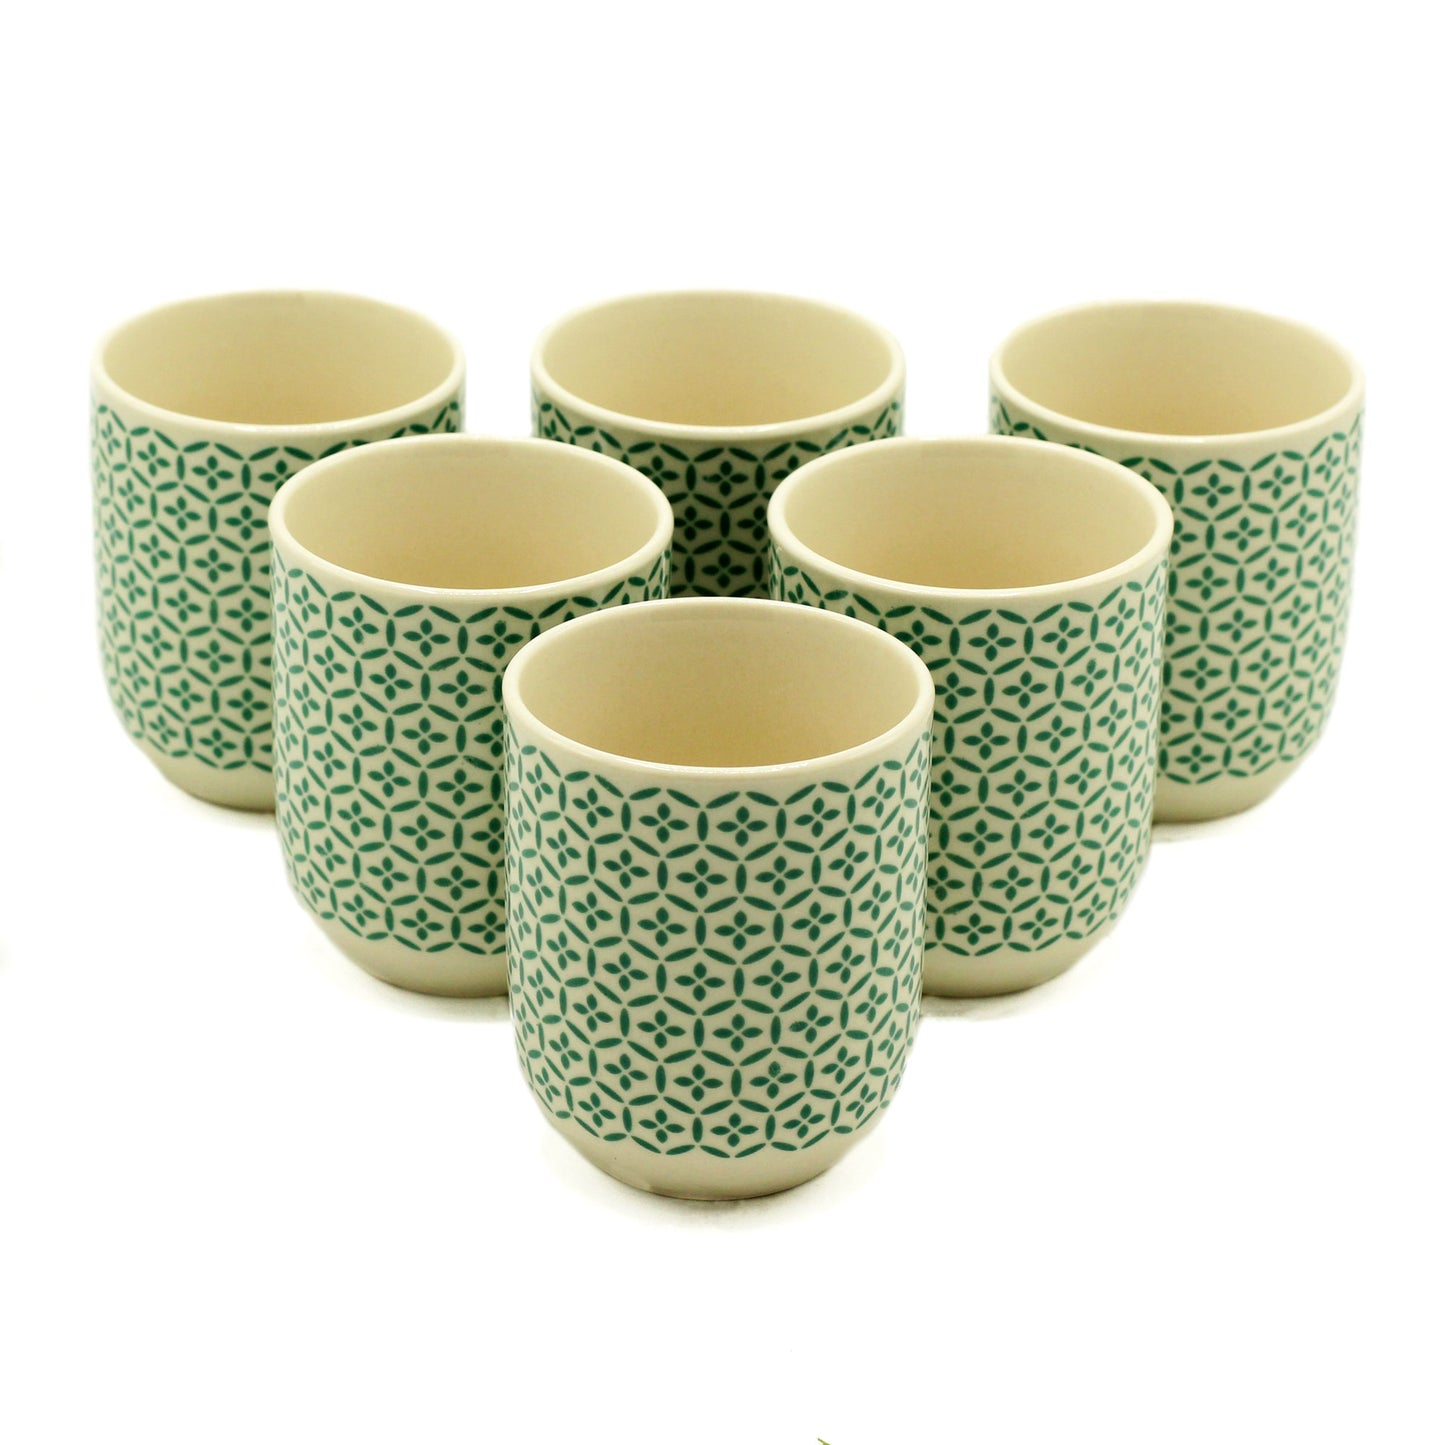 Herbal Tea Cups - Green Mosaic